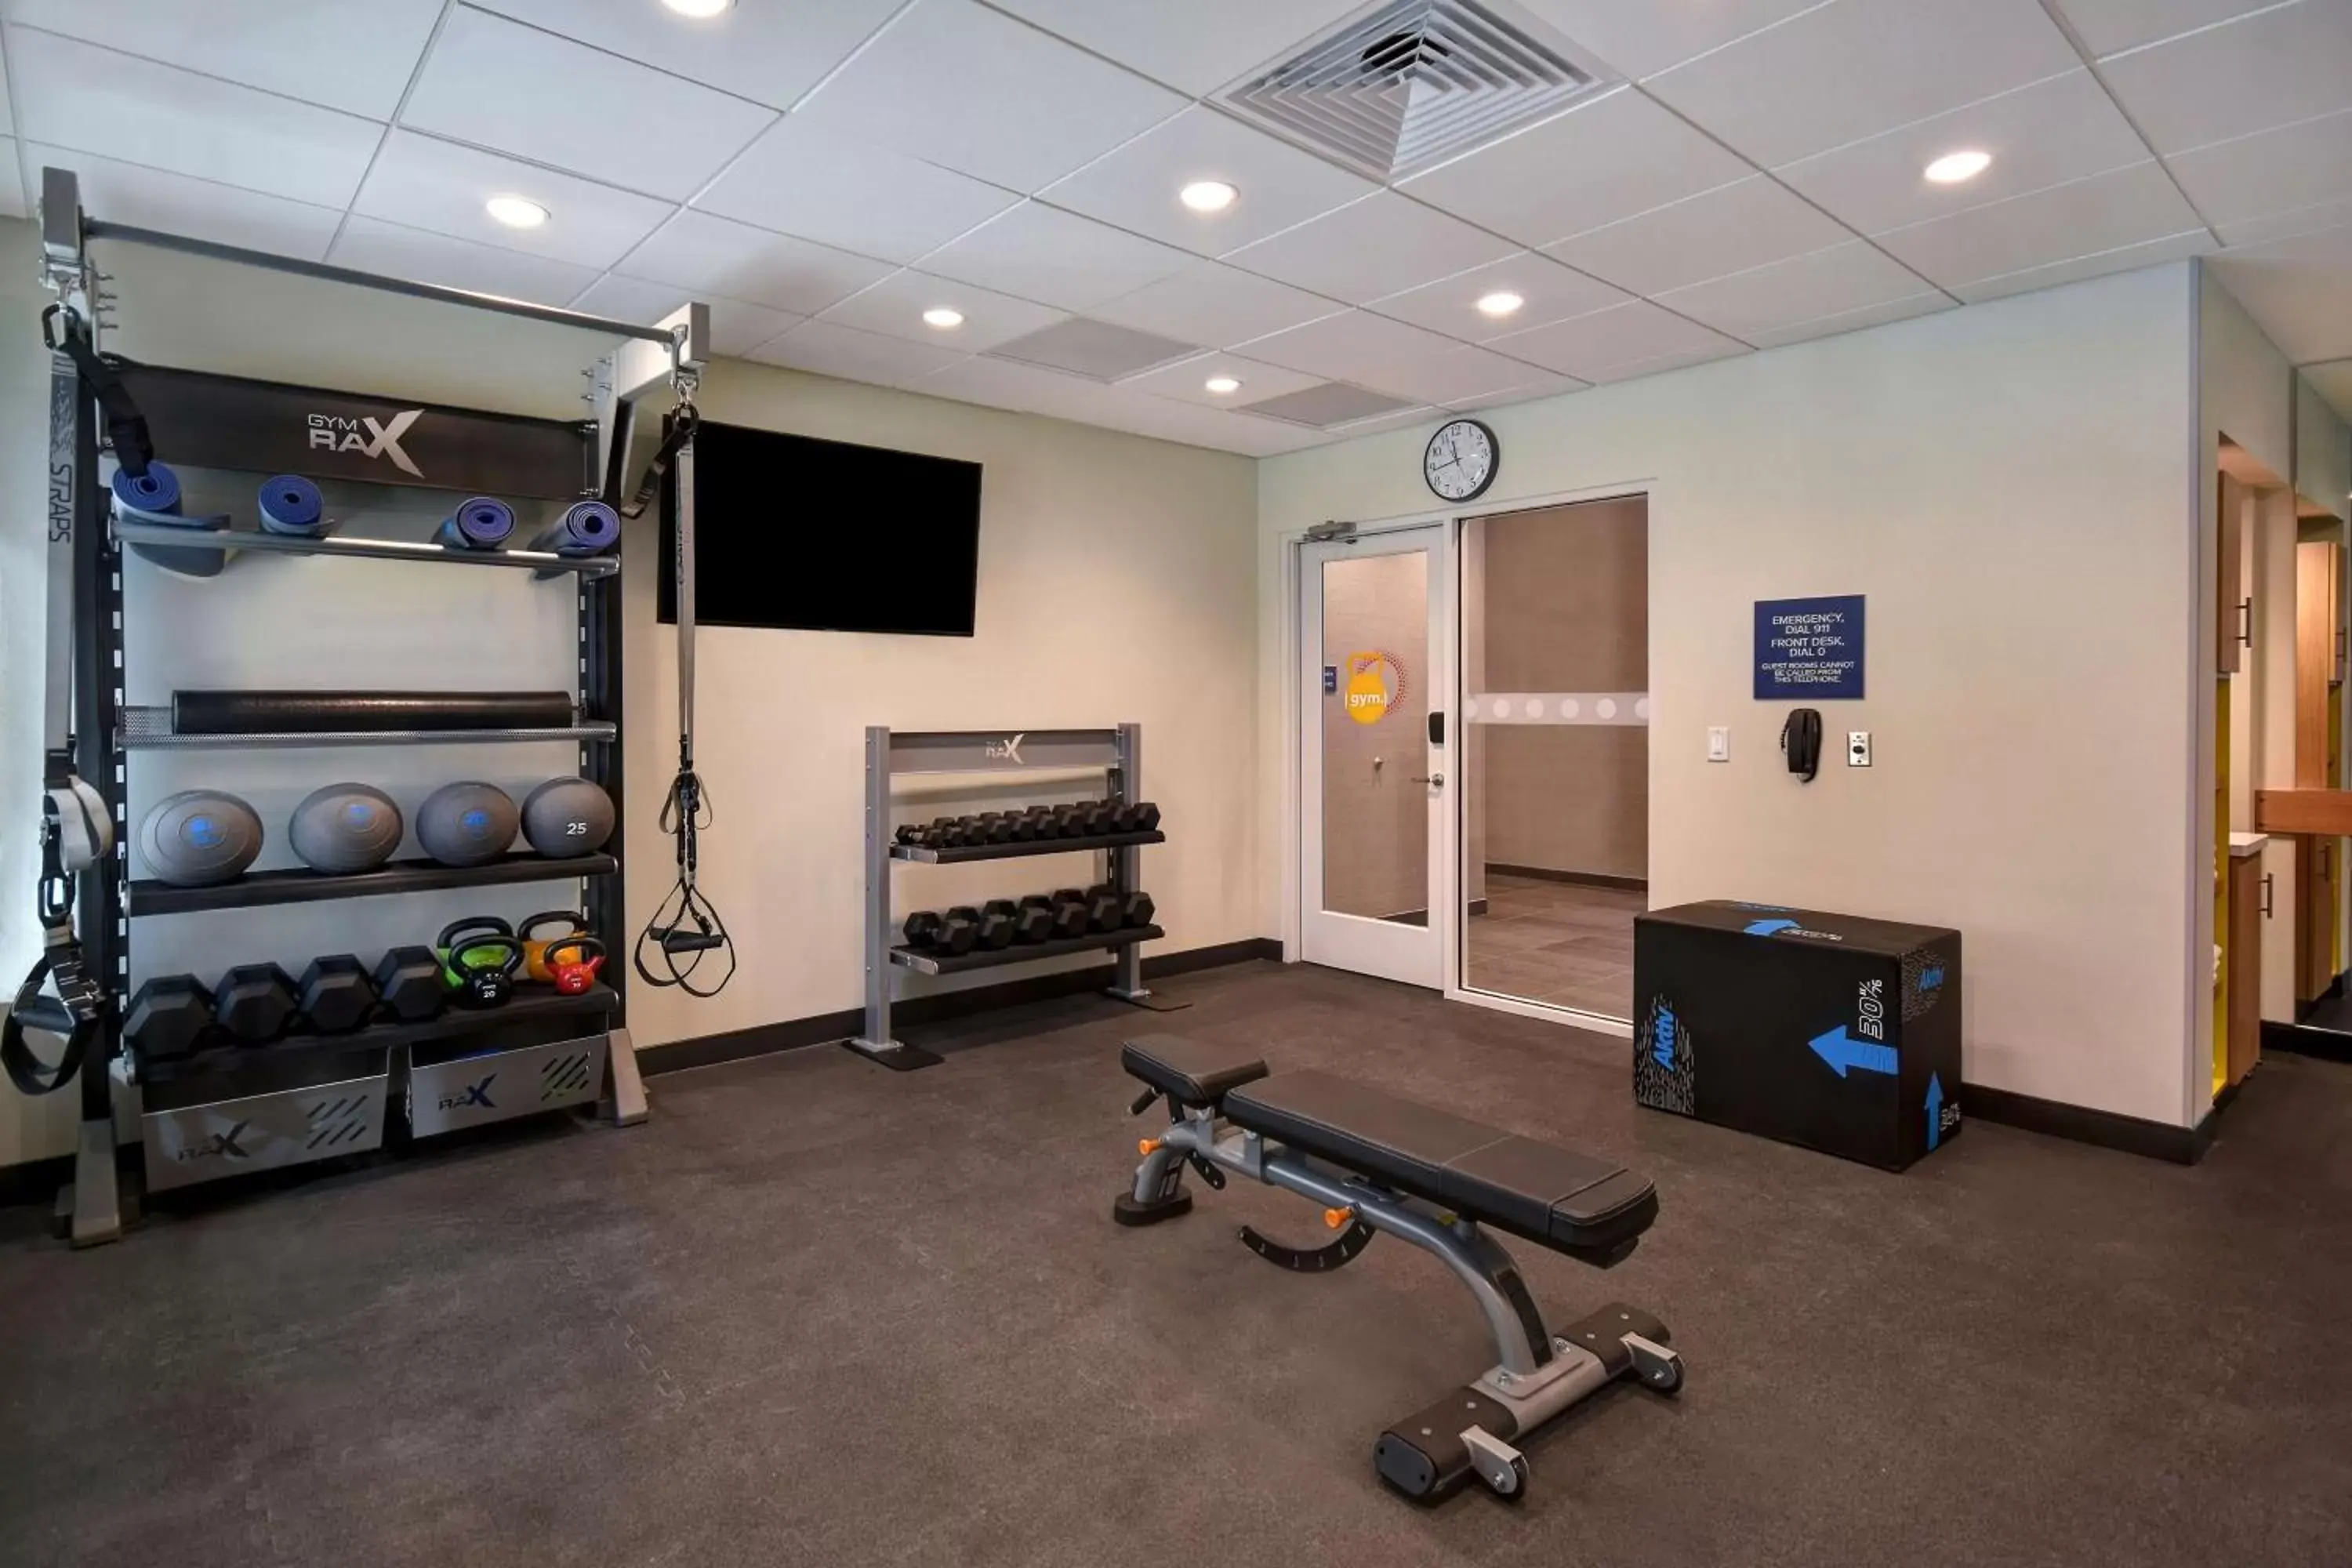 Fitness centre/facilities, Fitness Center/Facilities in Tru By Hilton Rockwall Dallas, Tx